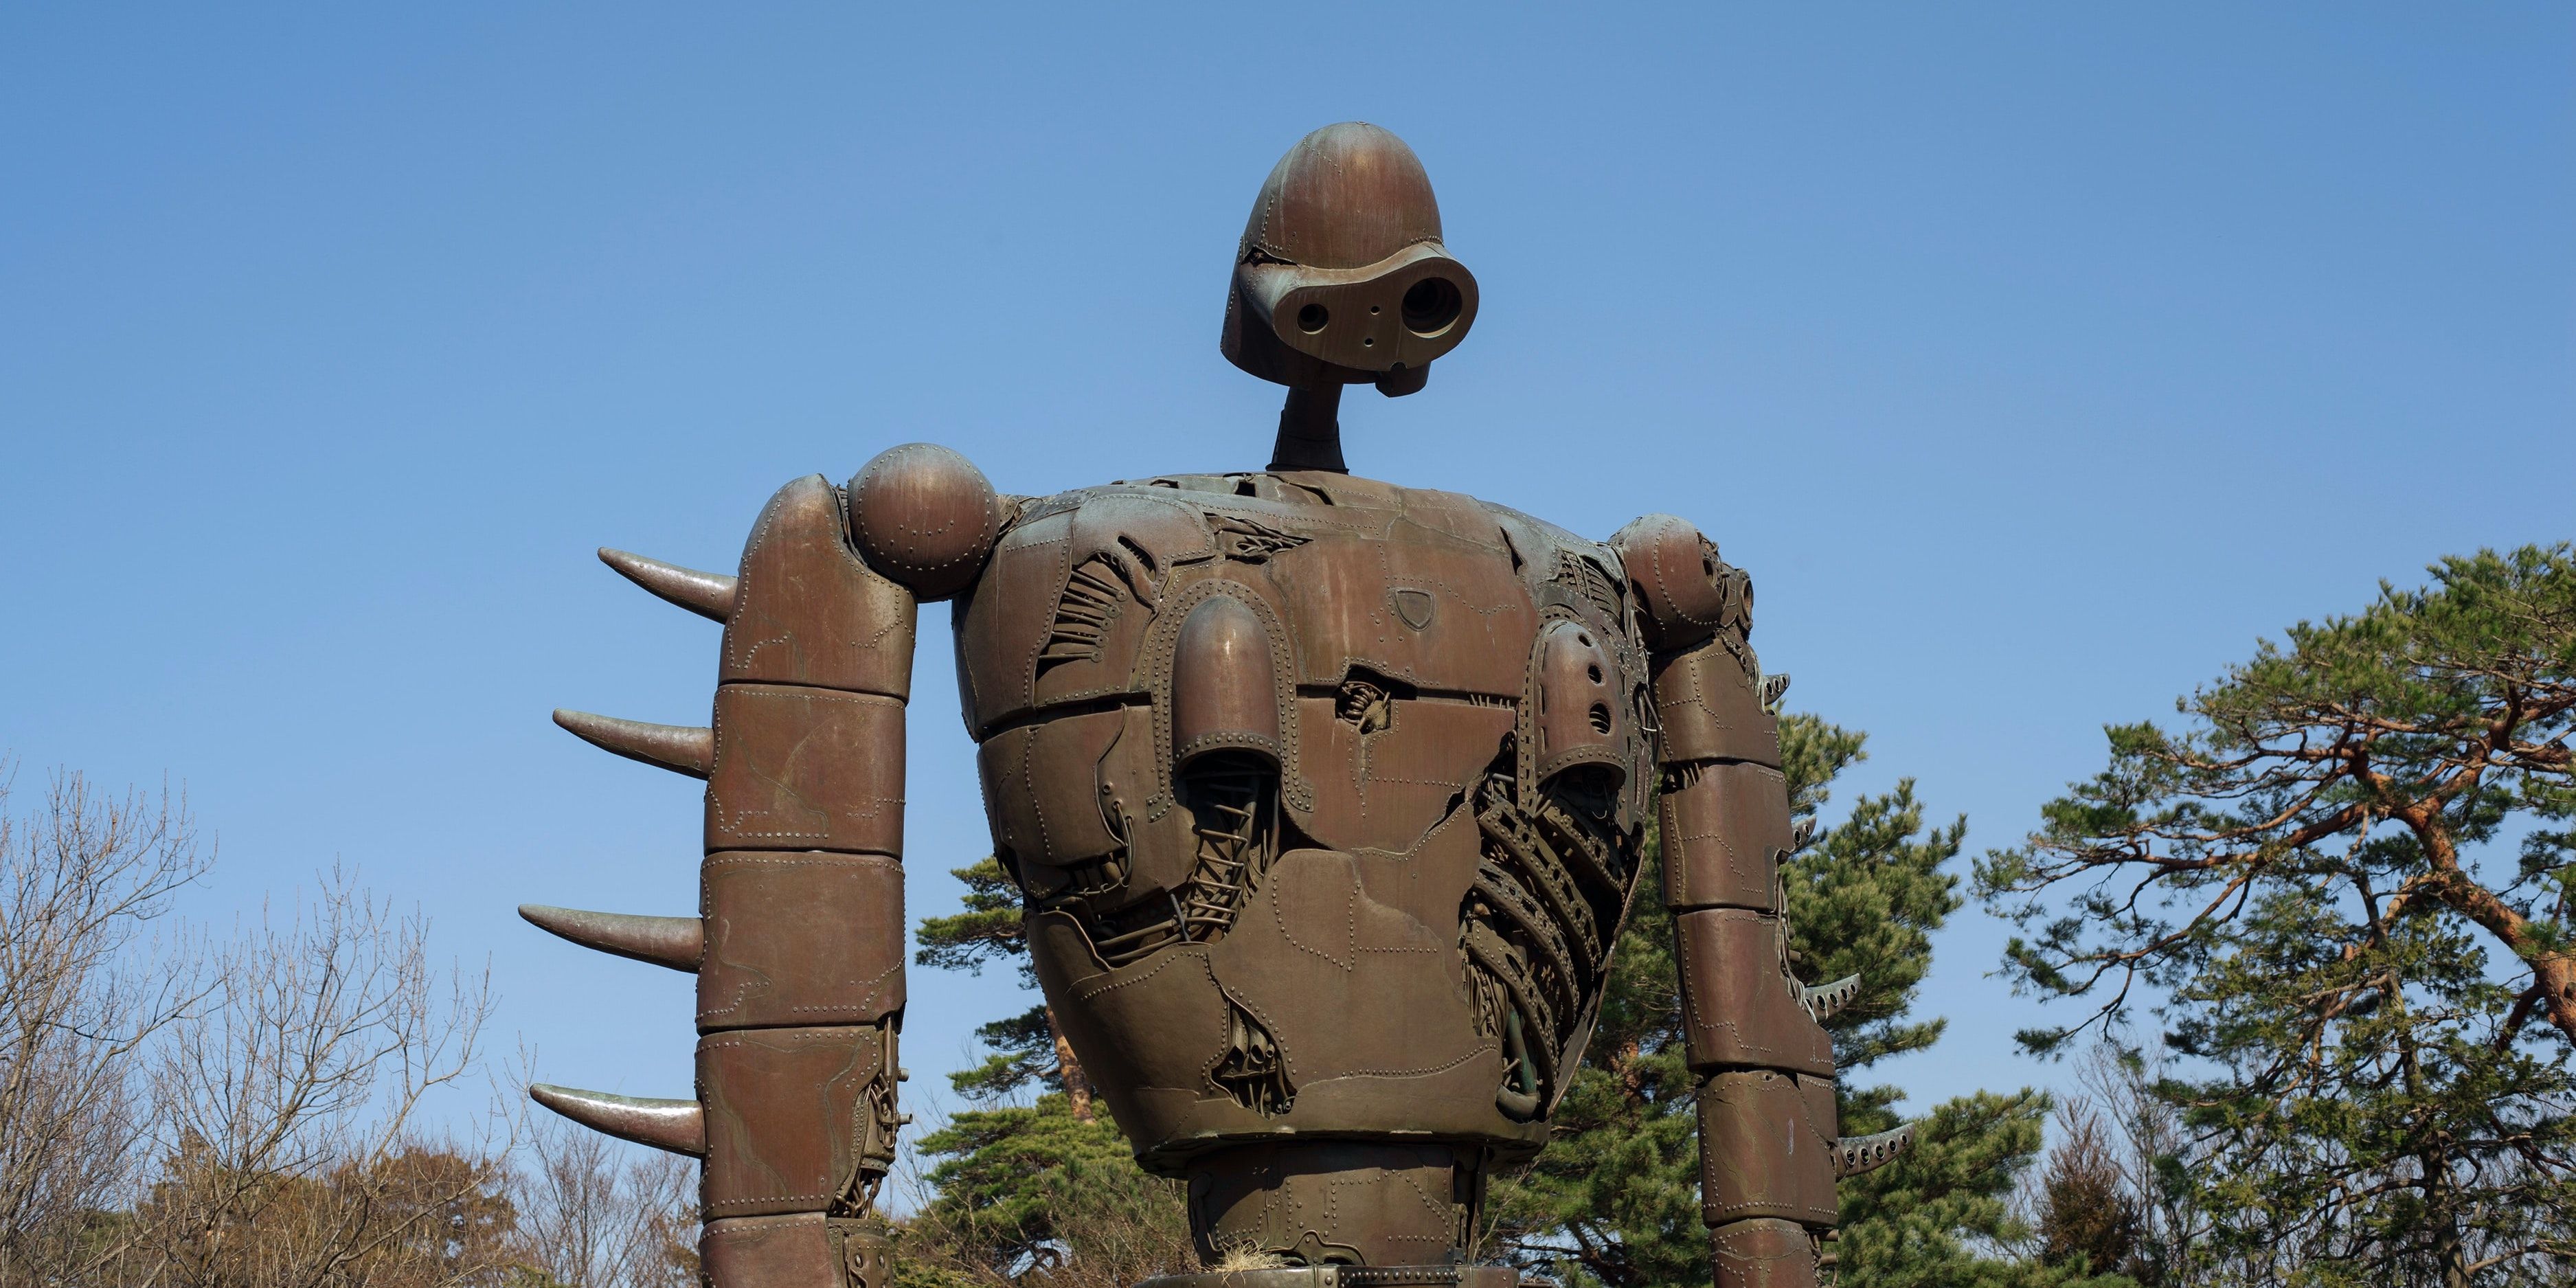 Studio Ghibli Museum Castle in the Sky Robot